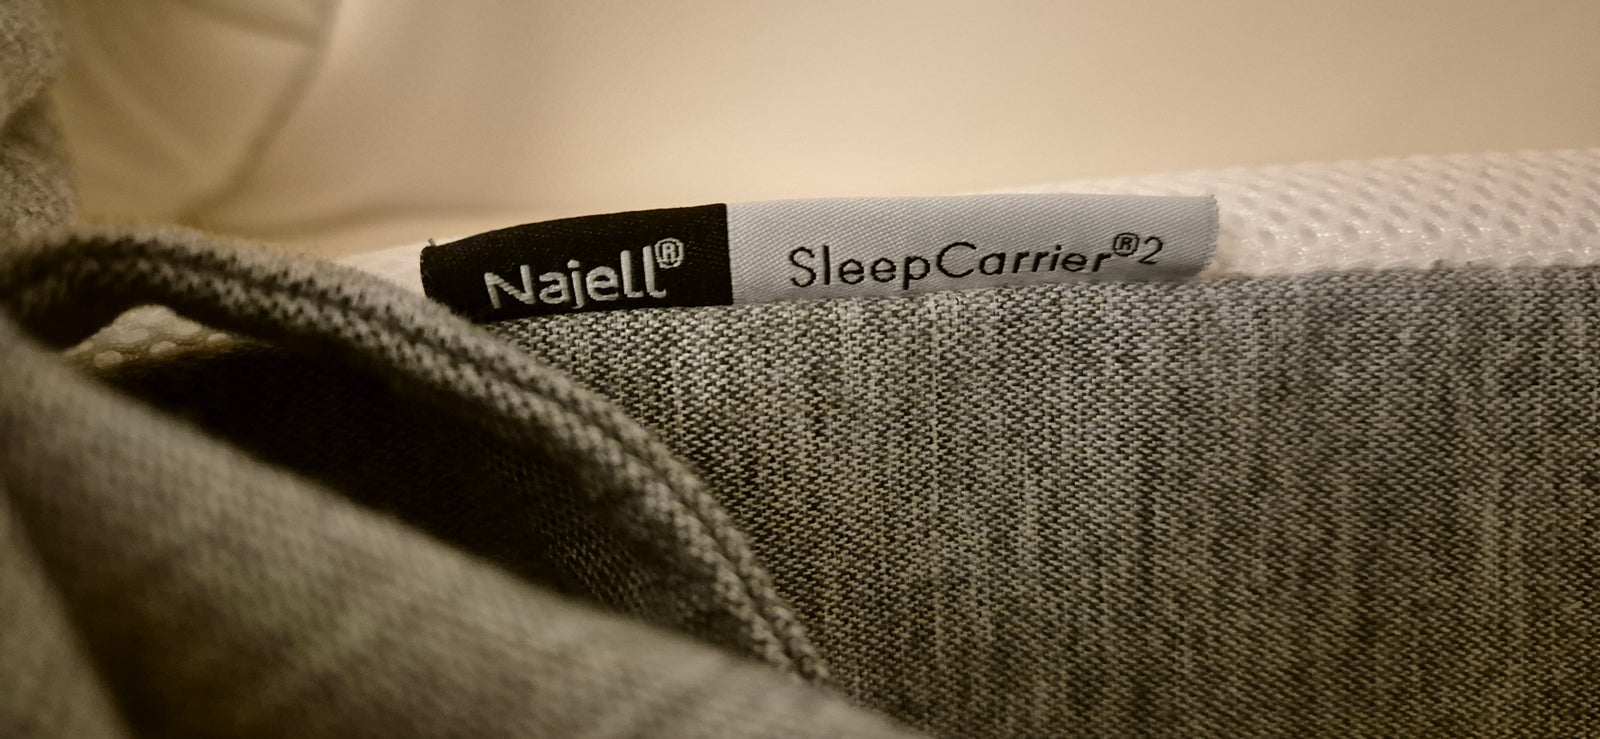 Babyindsats, Sleep Carrier vol 2, Najell